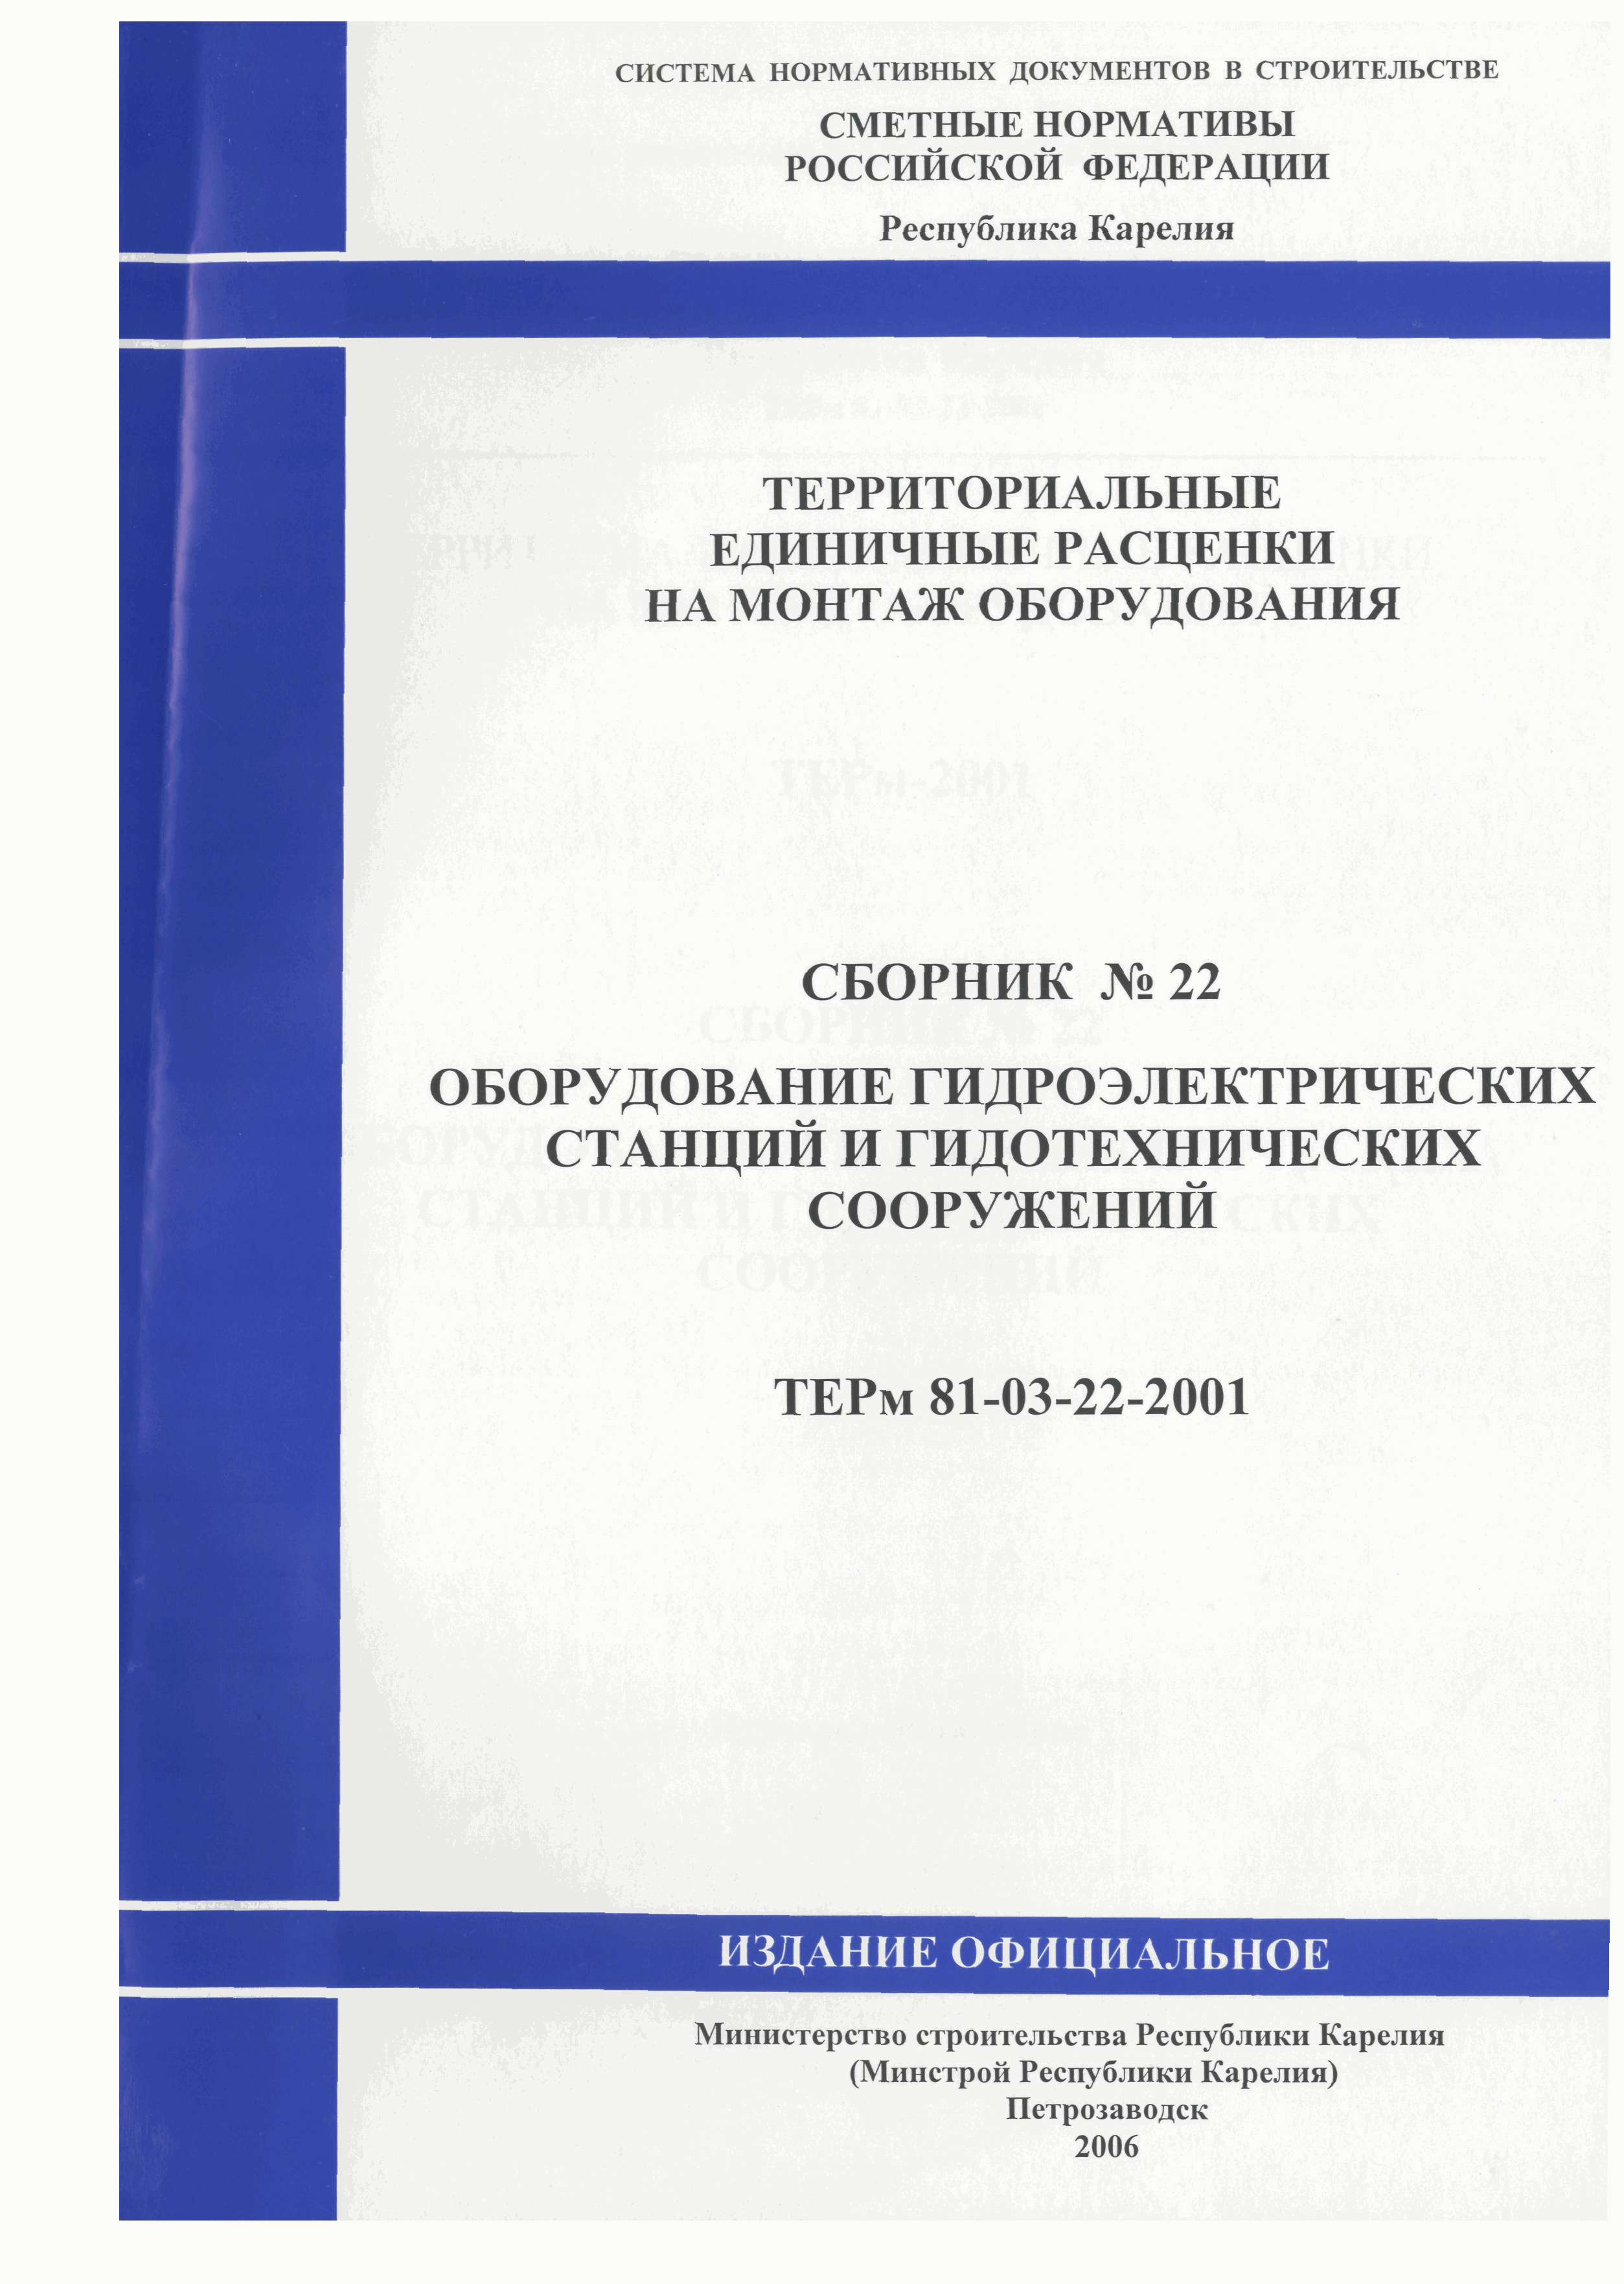 ТЕРм Республика Карелия 2001-22